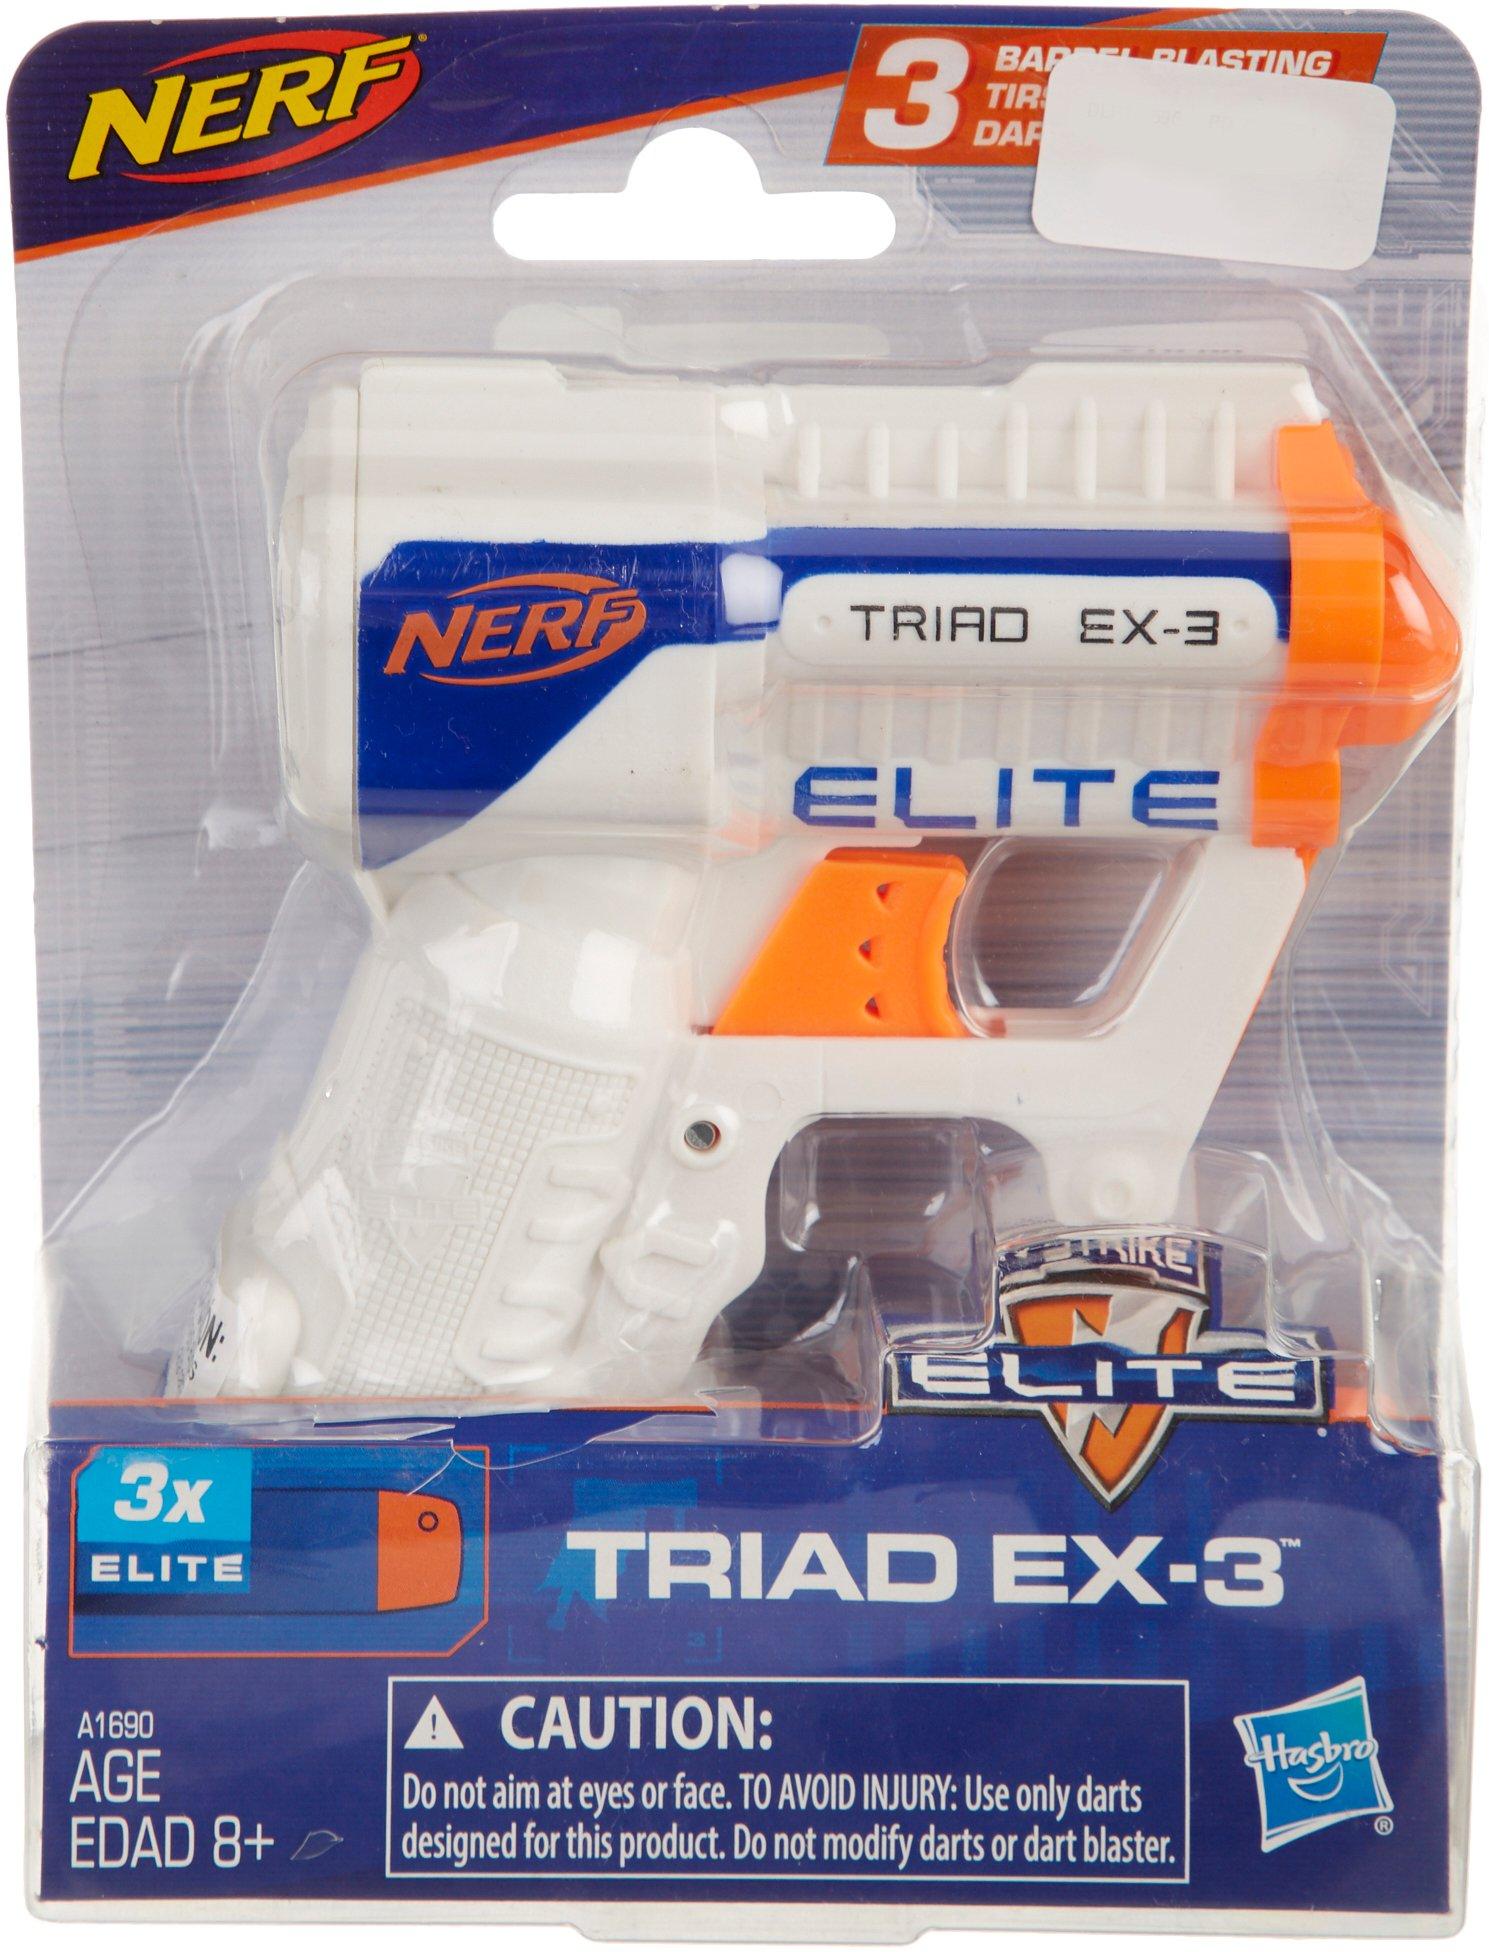 Nerf Triad EX-3 Elite Blaster & Darts Set One Size | eBay